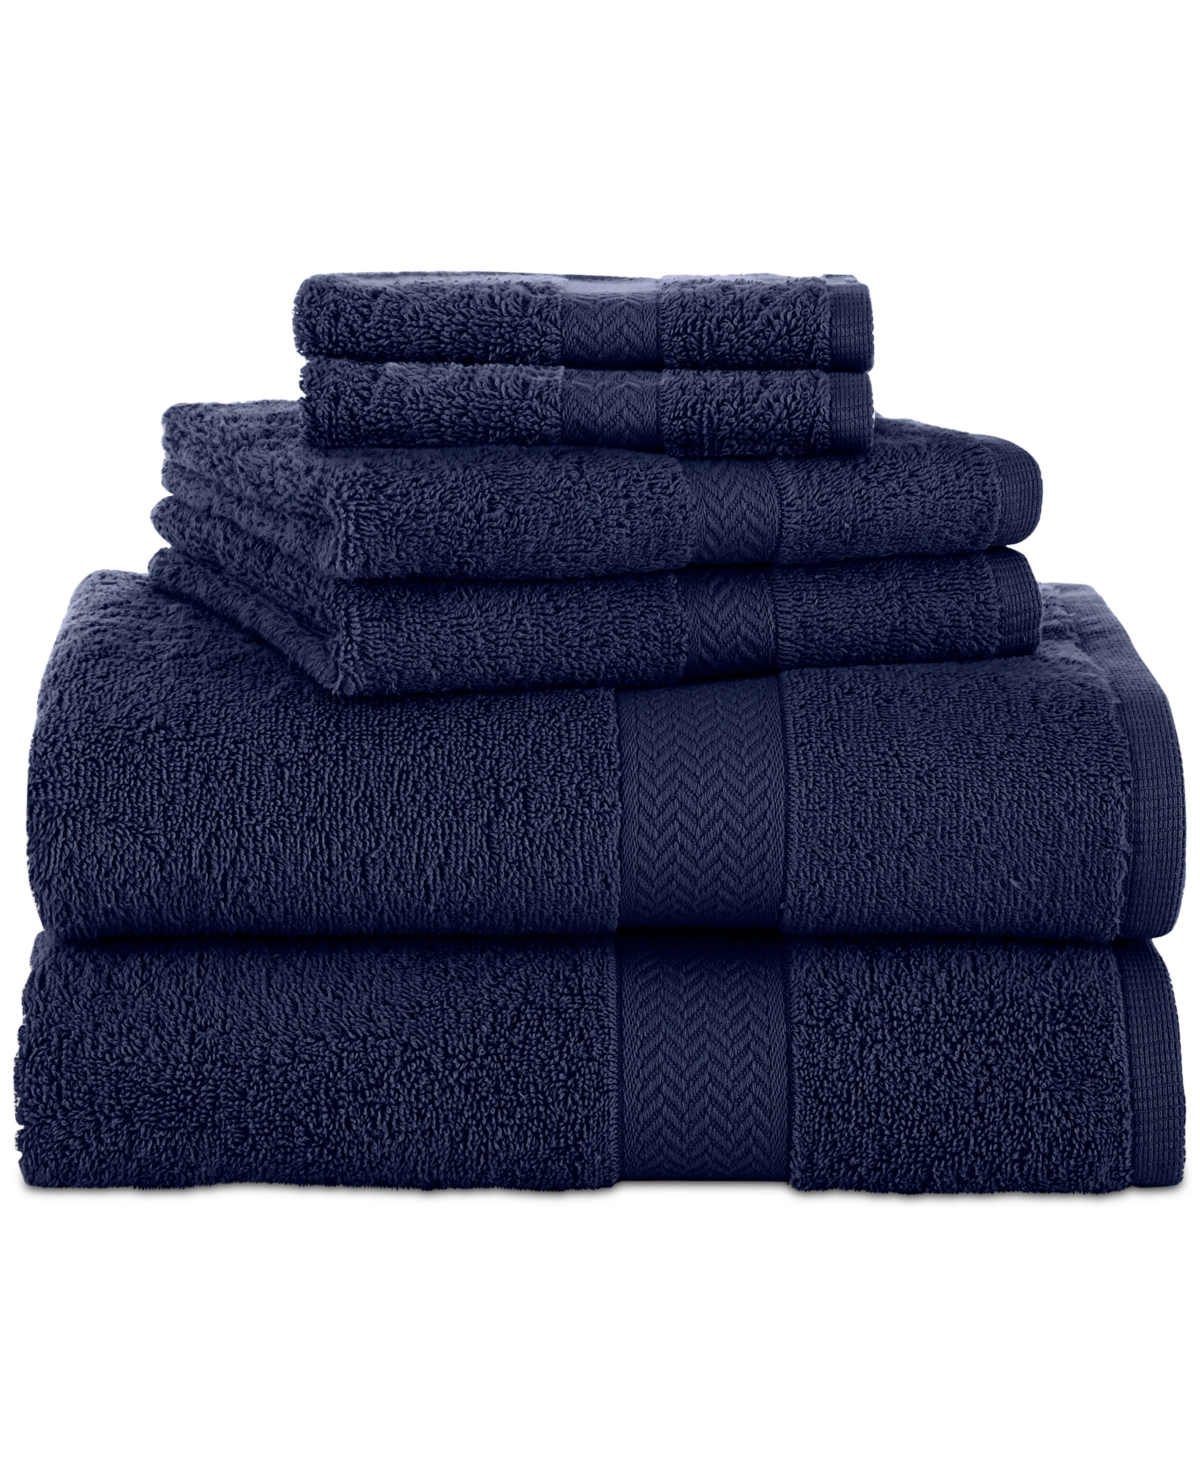 Martex Ringspun Cotton 6-pc. Towel Set In Navy